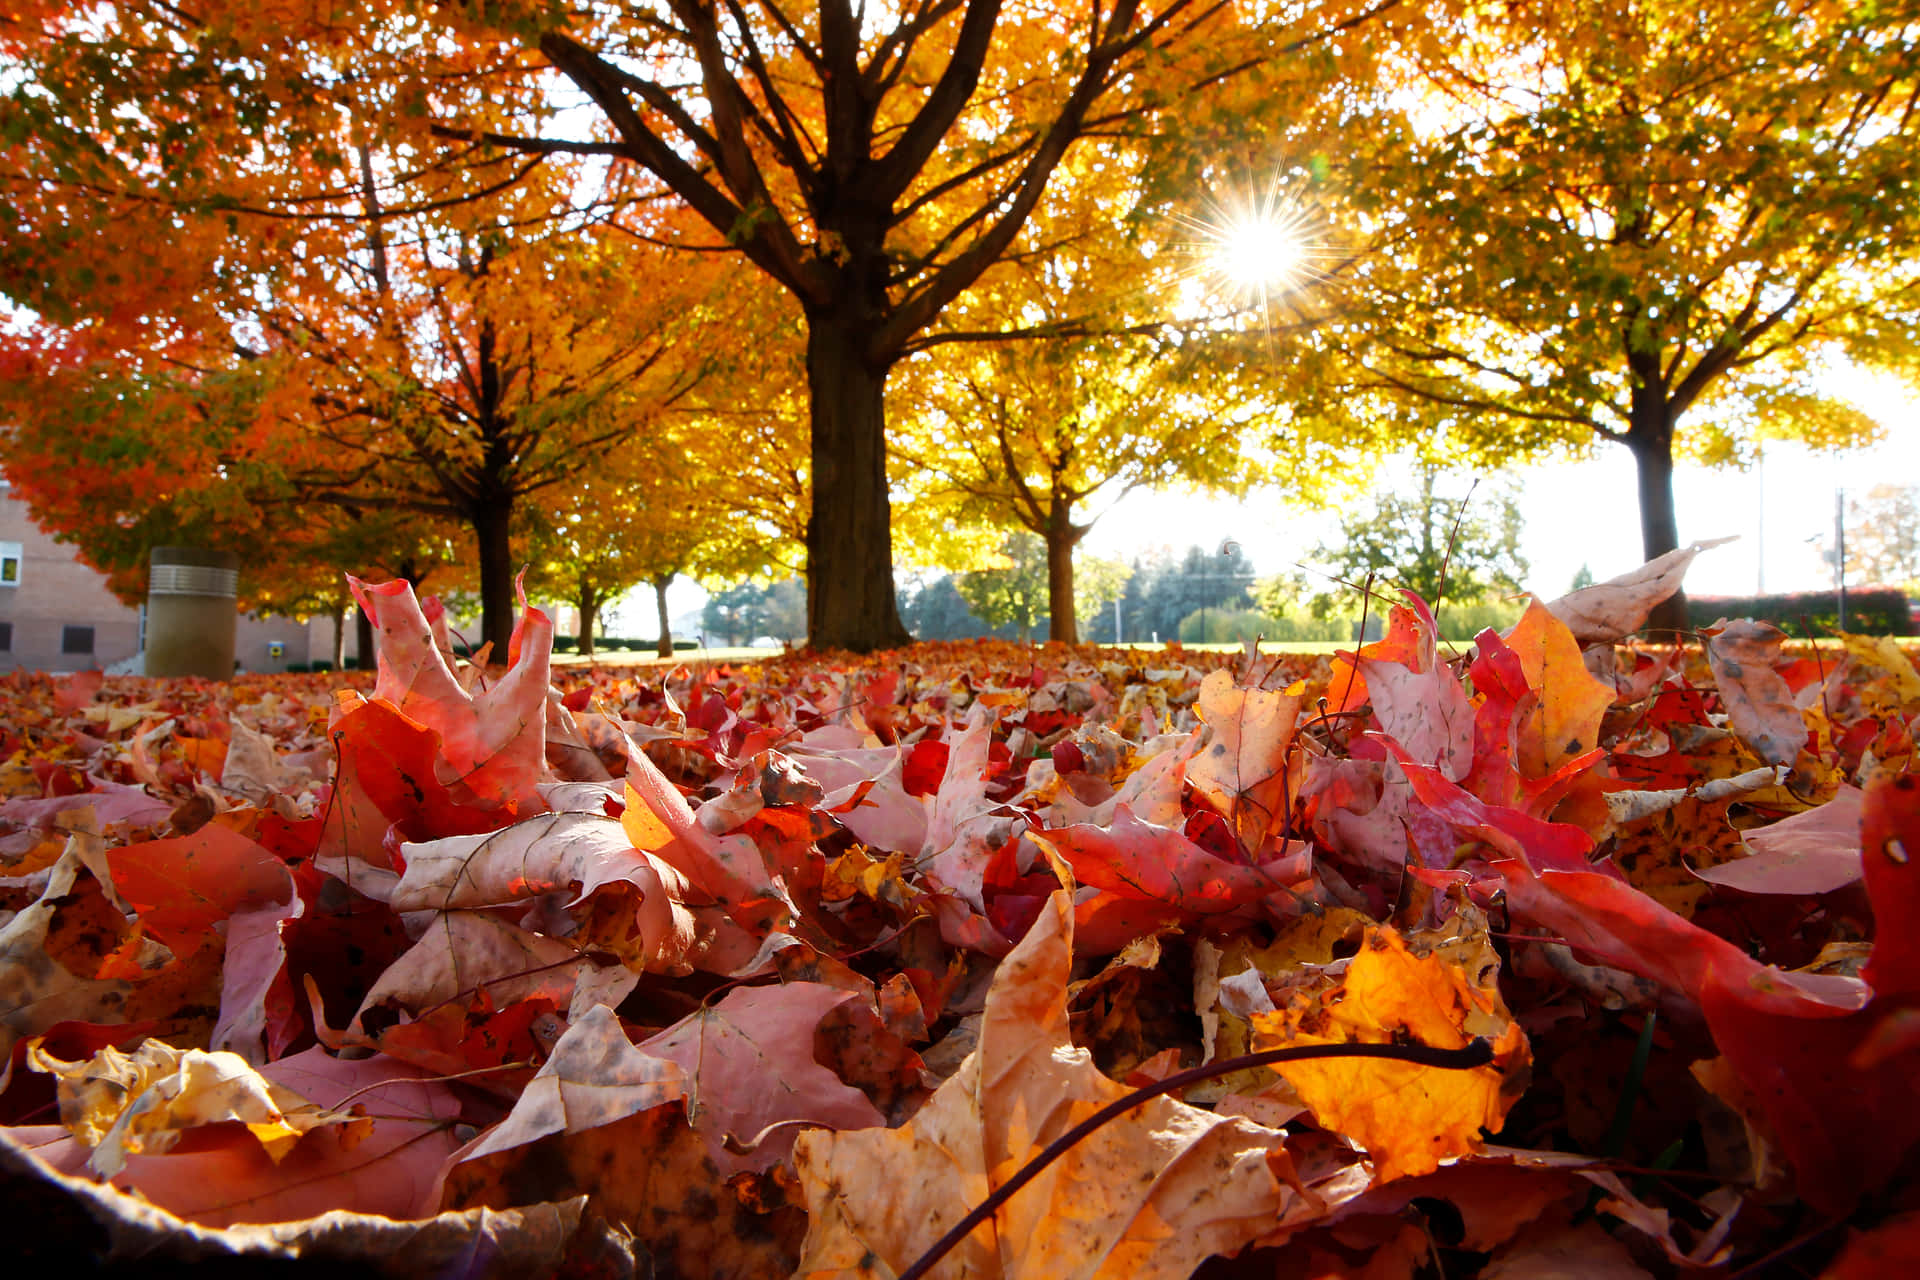 Take a stroll through the the vibrant Fall foliage